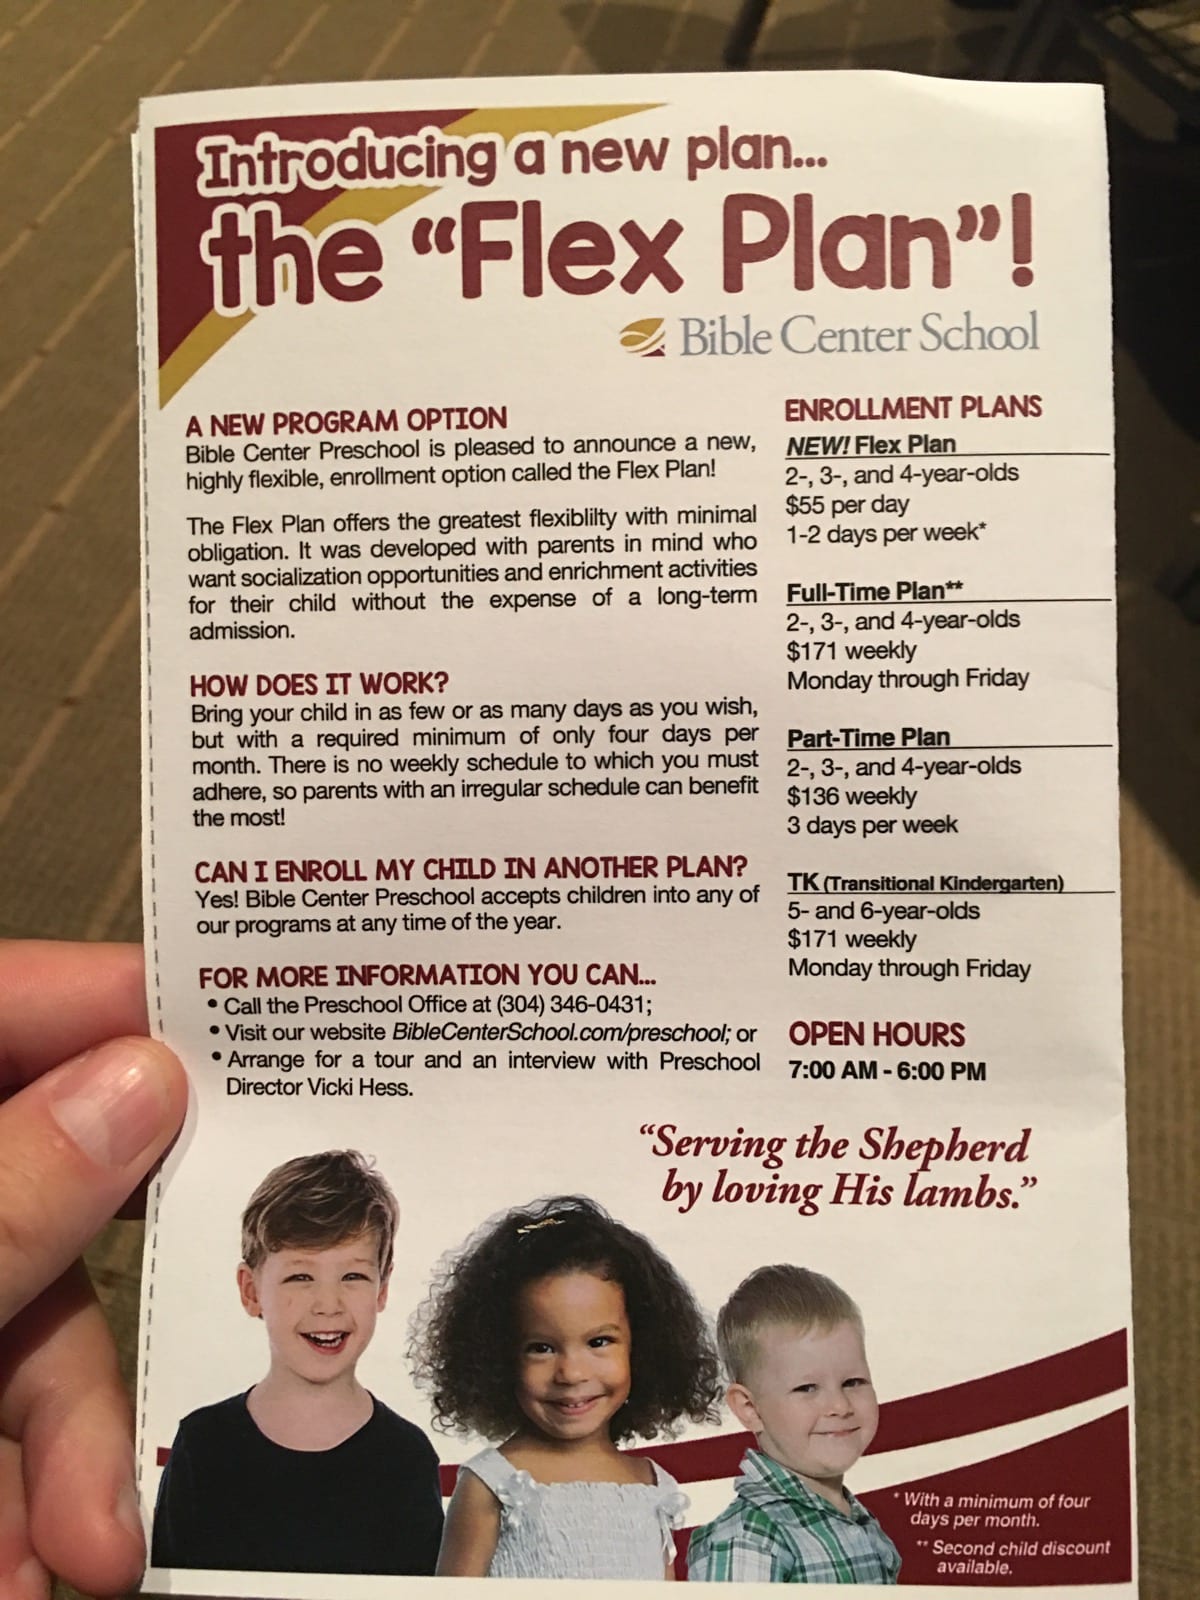 Preschool at Bible Center Offers New Flexible Schedule